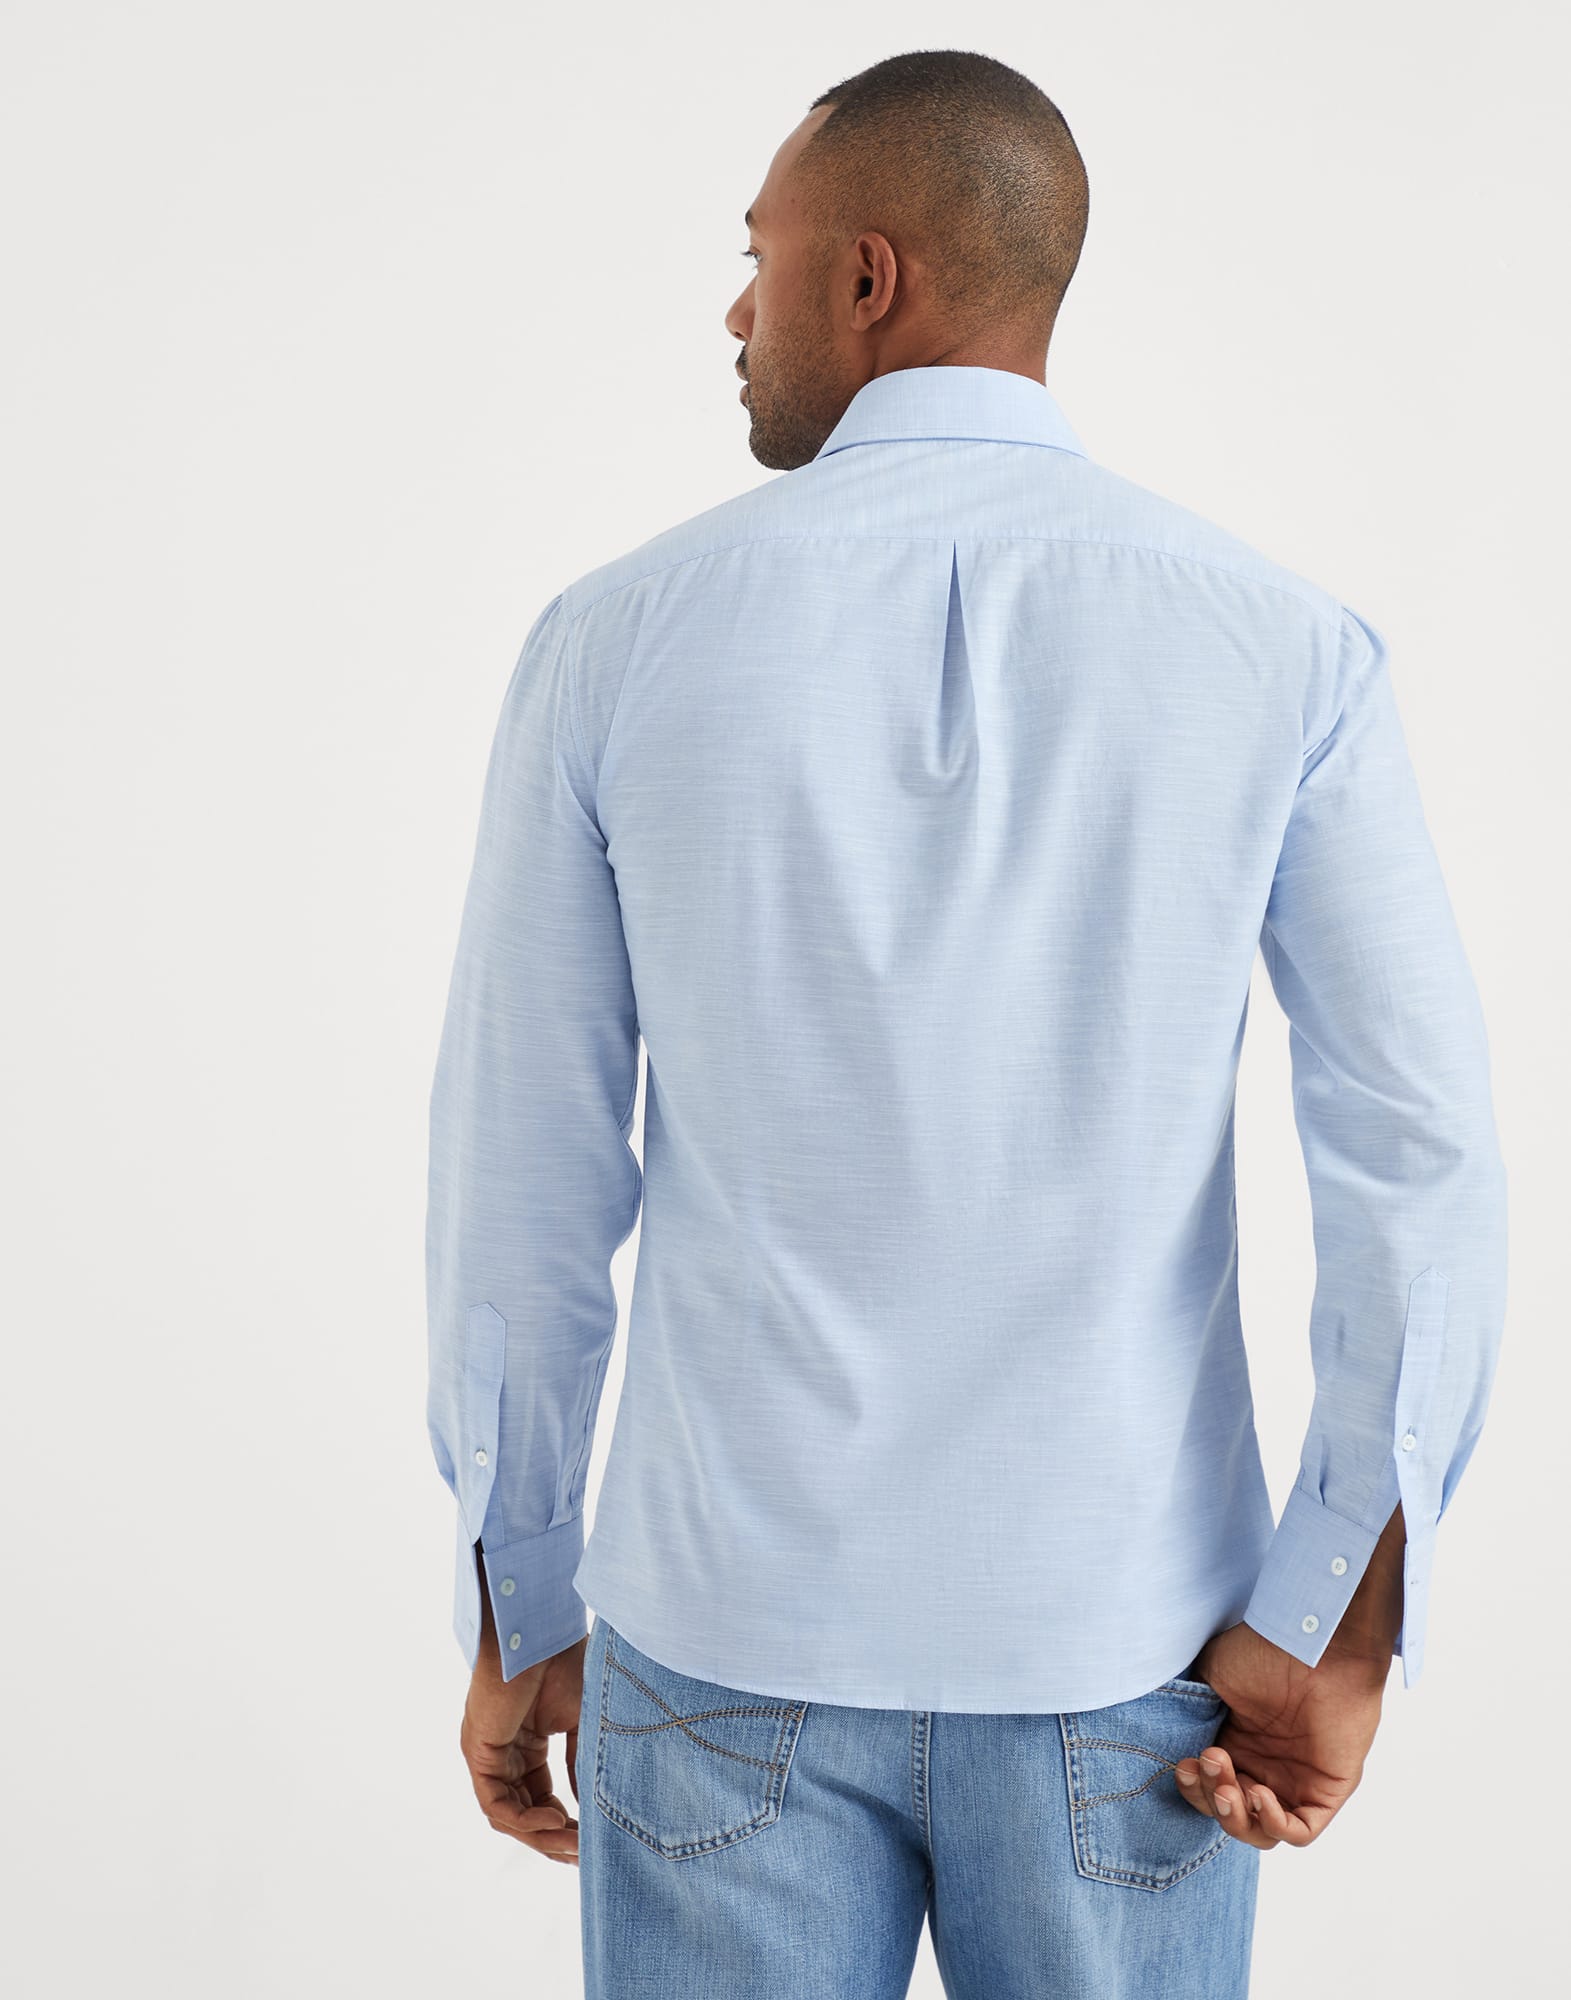 Oxford shirt (241MS6661718) for Man | Brunello Cucinelli